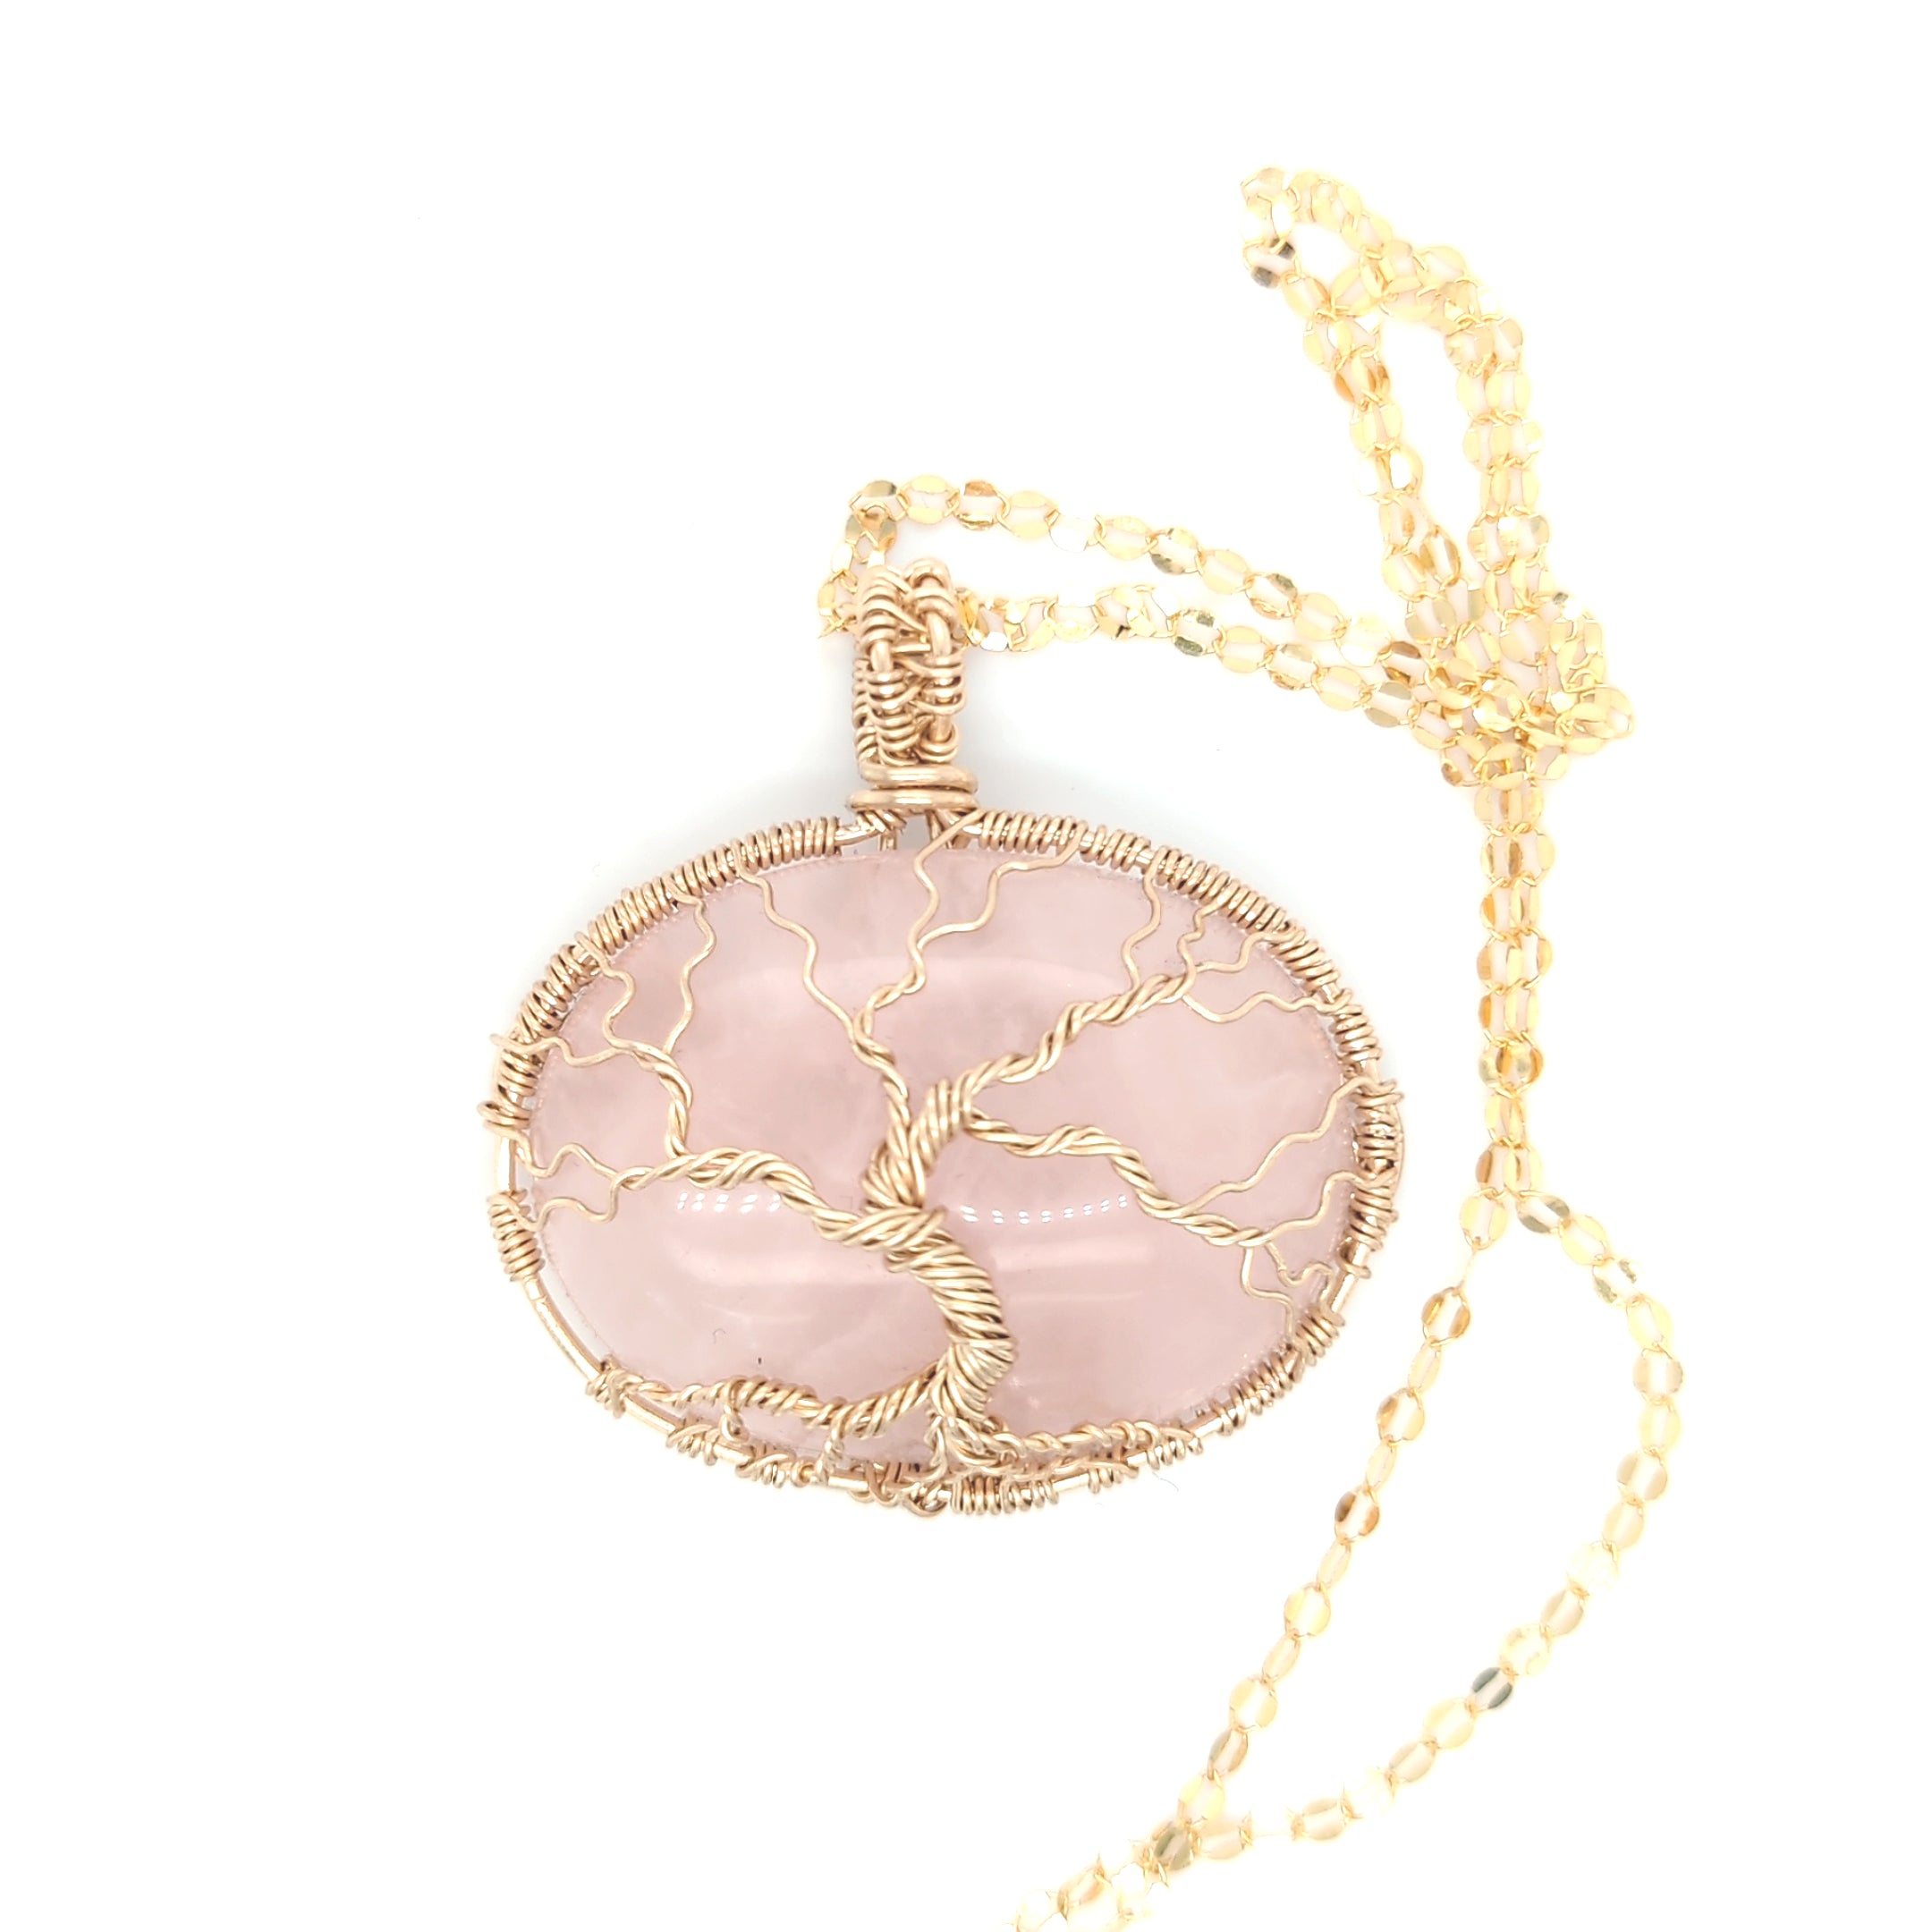 Tree of life pendant with on rose quartz gemstone